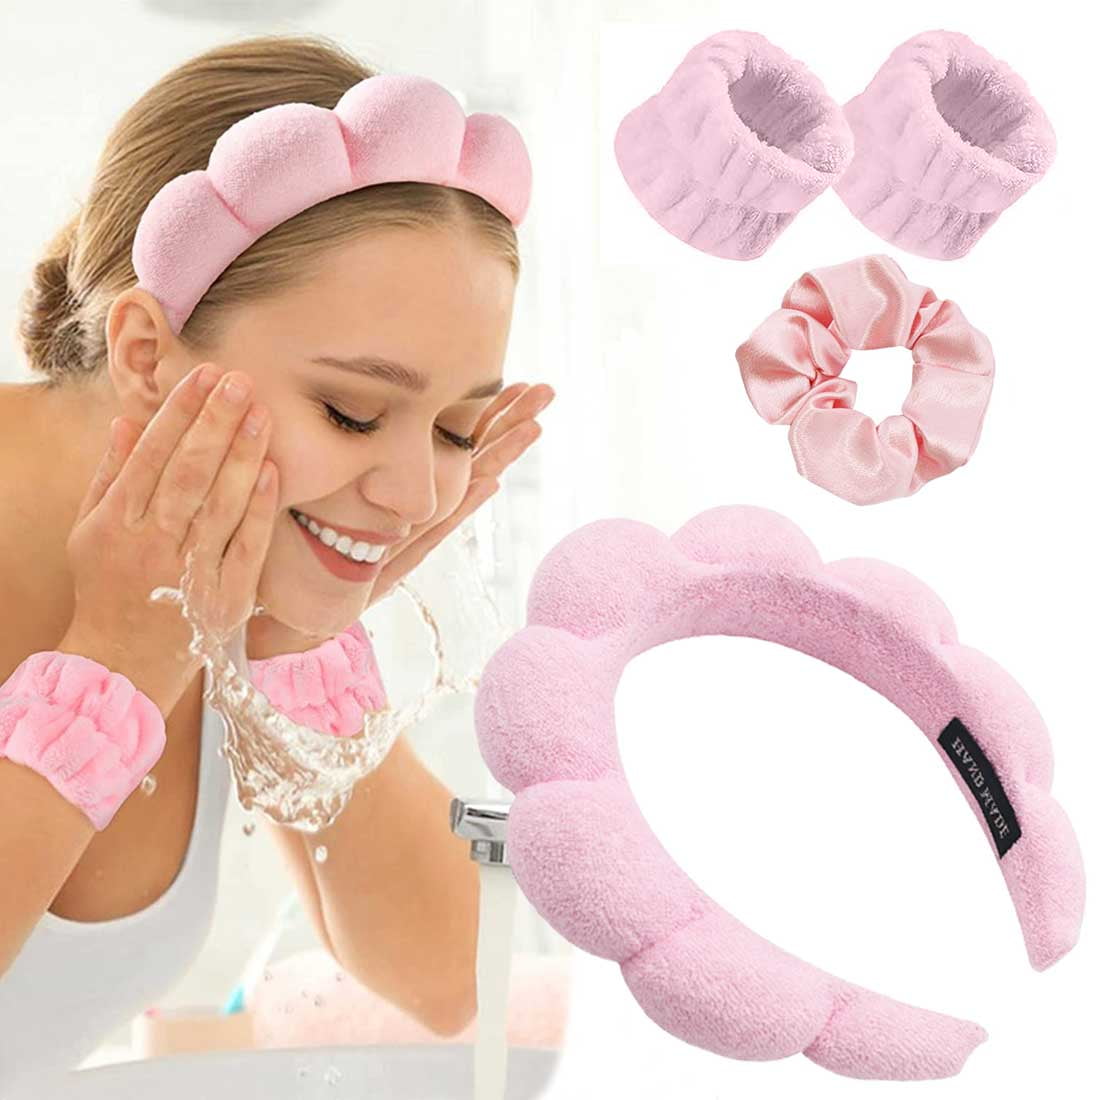  Aopwsrlyi Spa Headband for Women,Puffy Spa Headband mimi and  co spa headband for Washing Face Makeup Headbands(Pink,One Size) : Beauty &  Personal Care